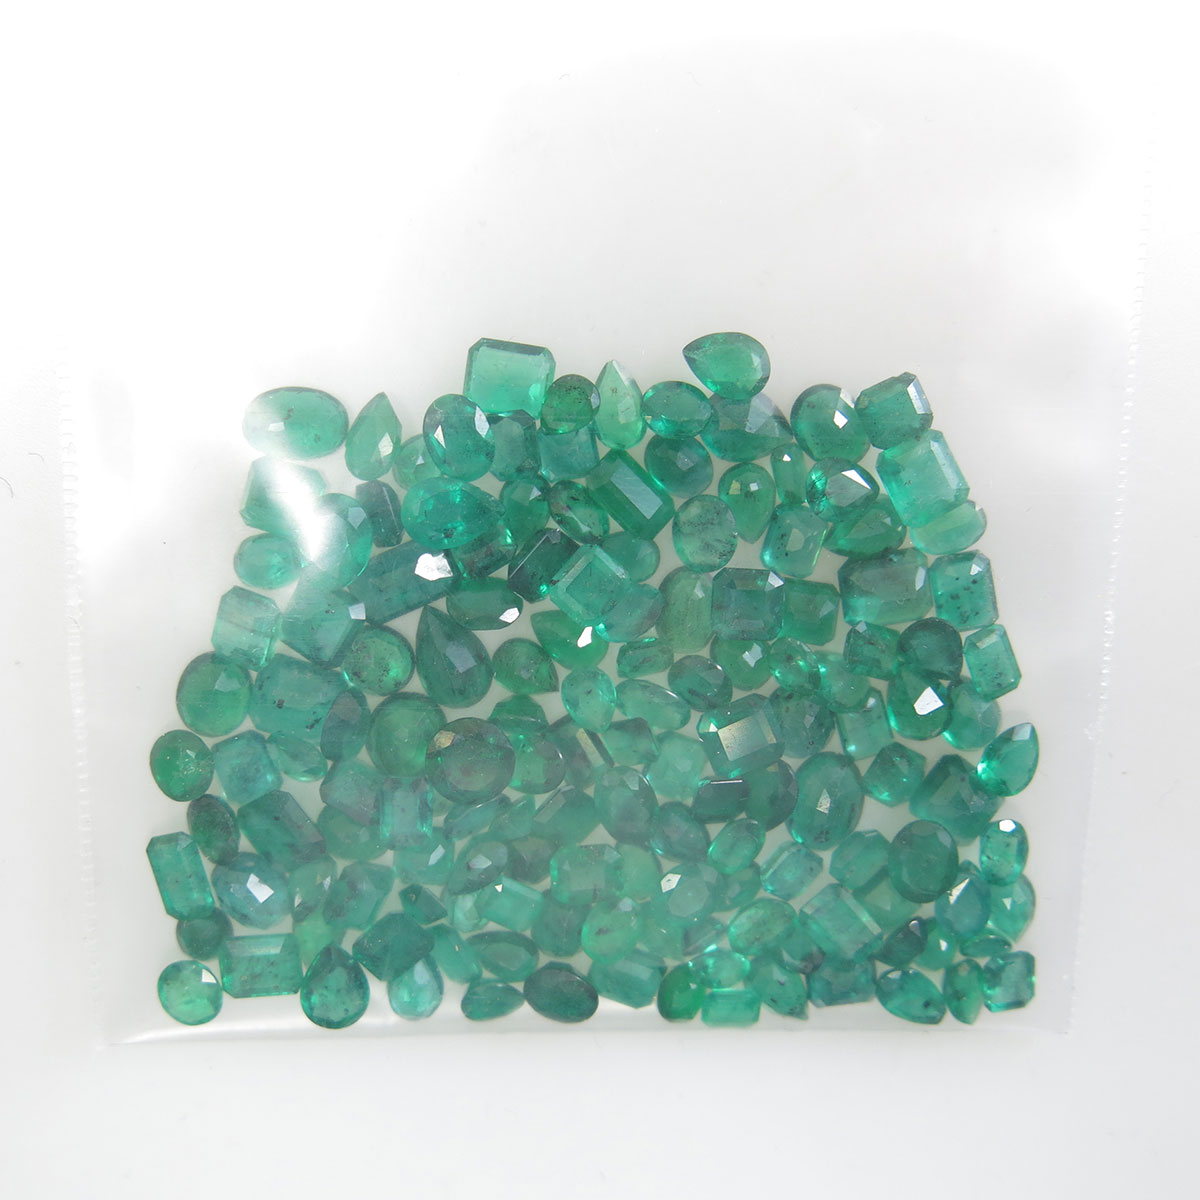 Quantity Of Unmounted Emeralds